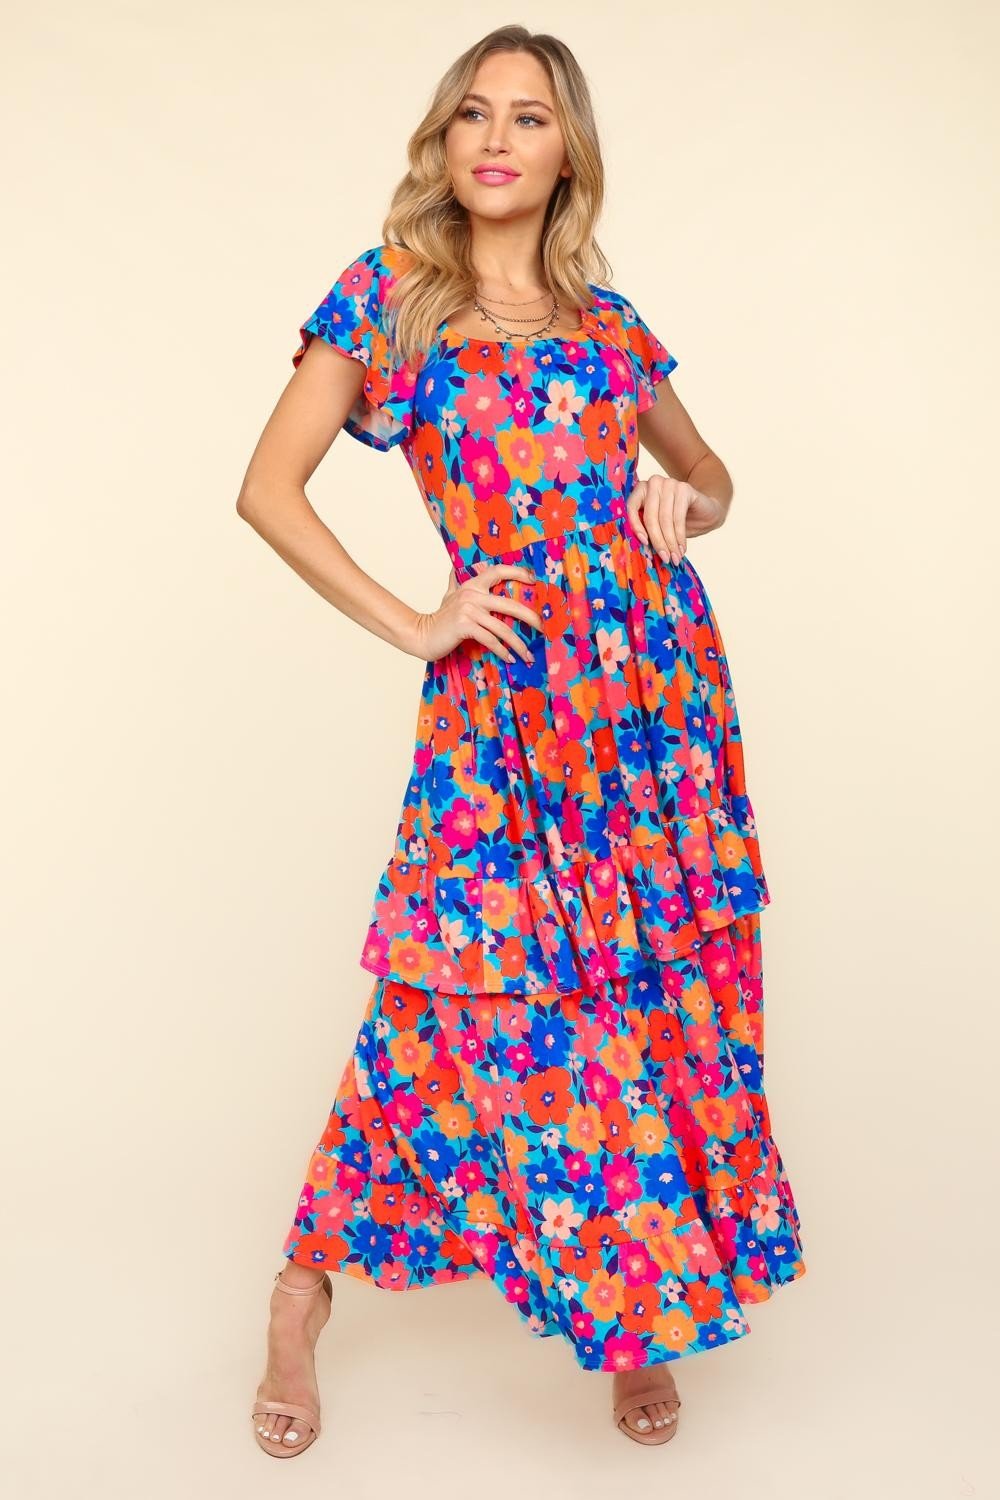 Floral Ruffled Maxi Dress with Pockets in Blue OrangeMaxi DressHaptics